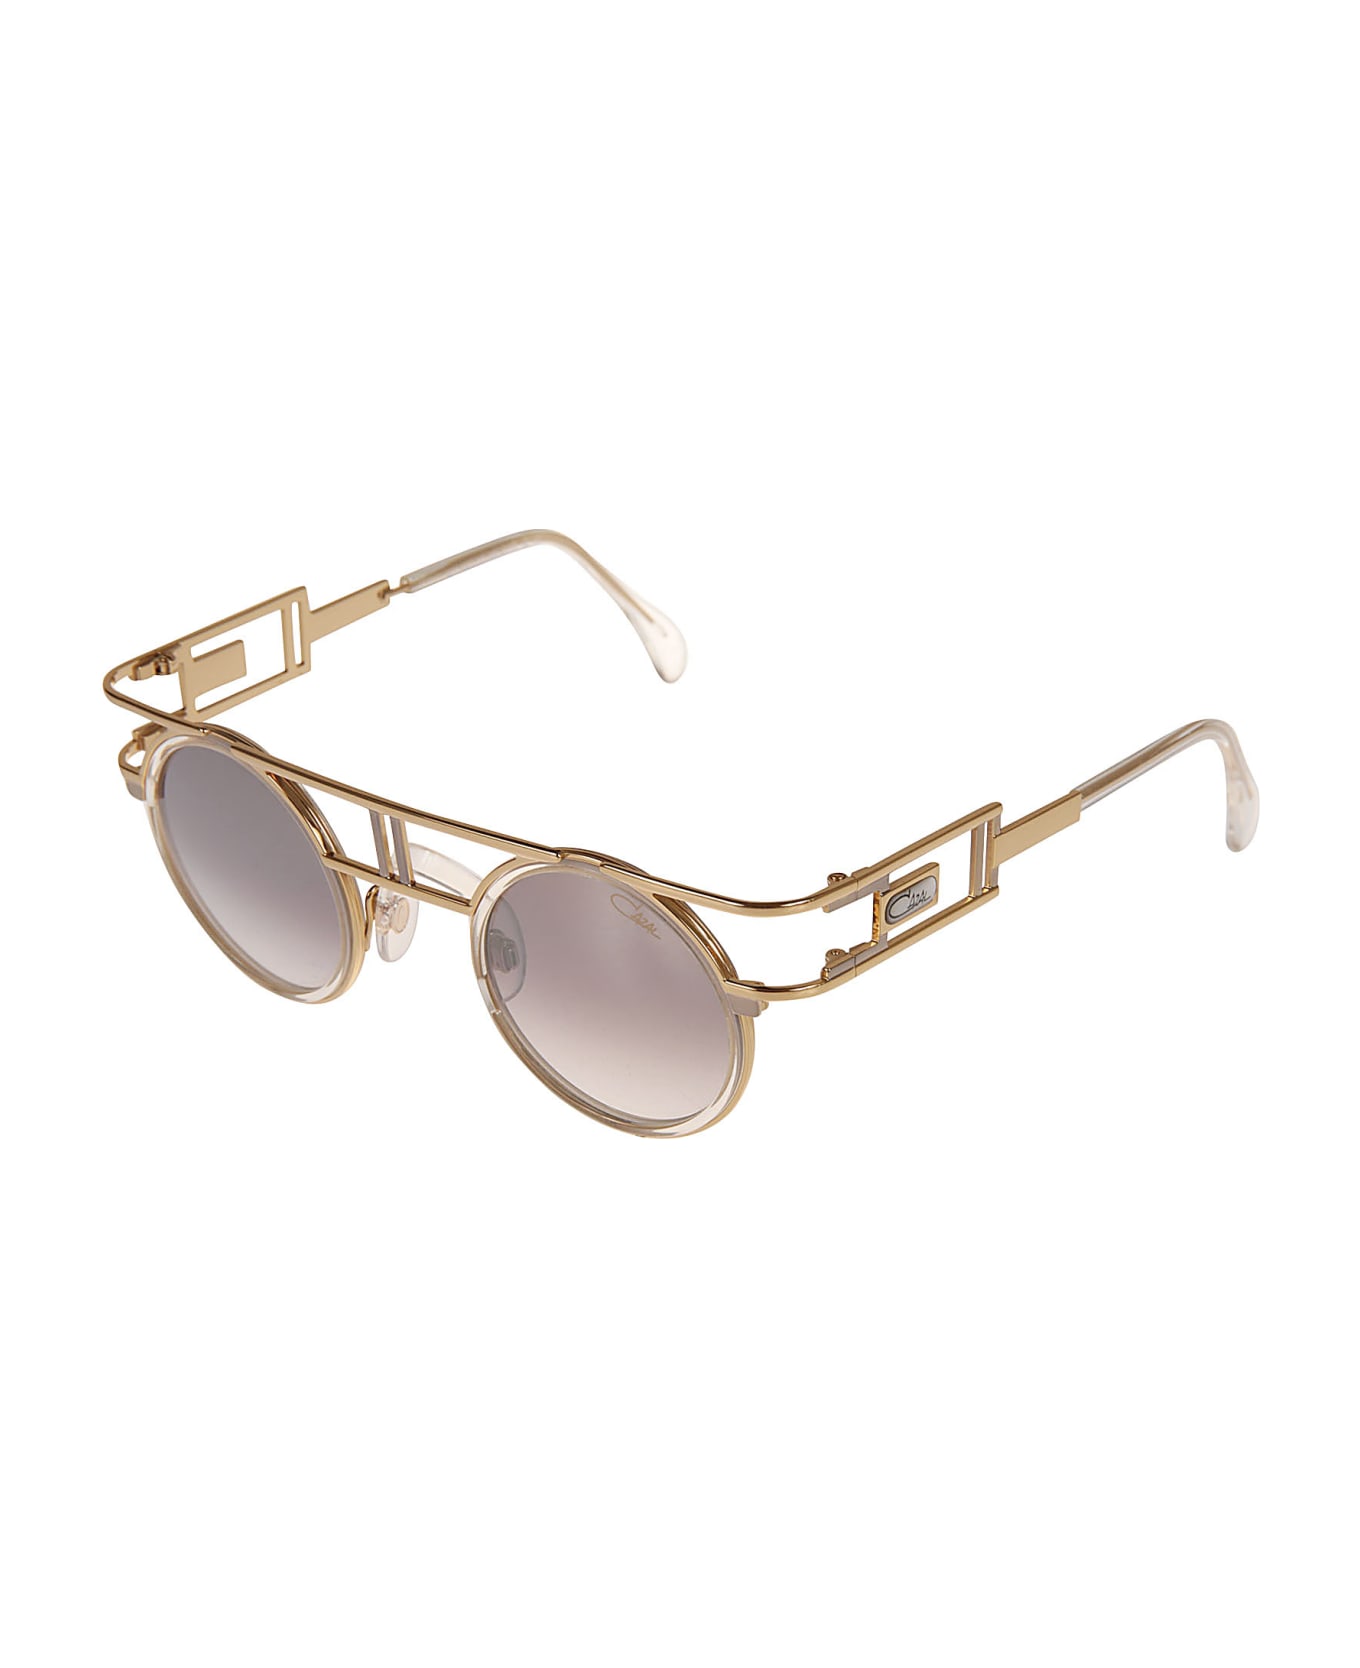 Cazal Round Frame Sunglasses - Gold